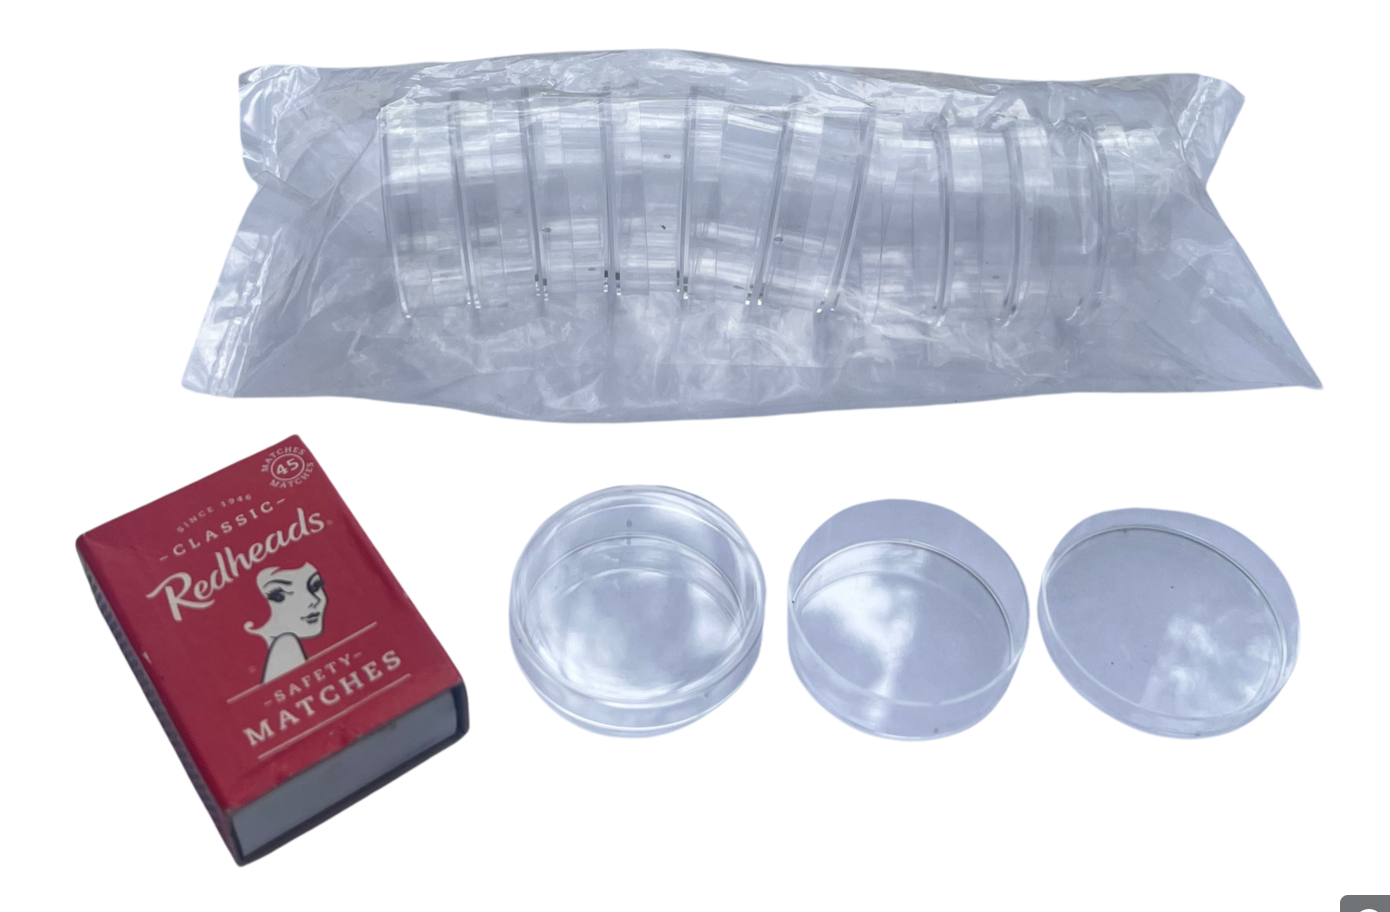 Sterile Plastic Petri Dishes - Pack of 10 - Diameter 4cm